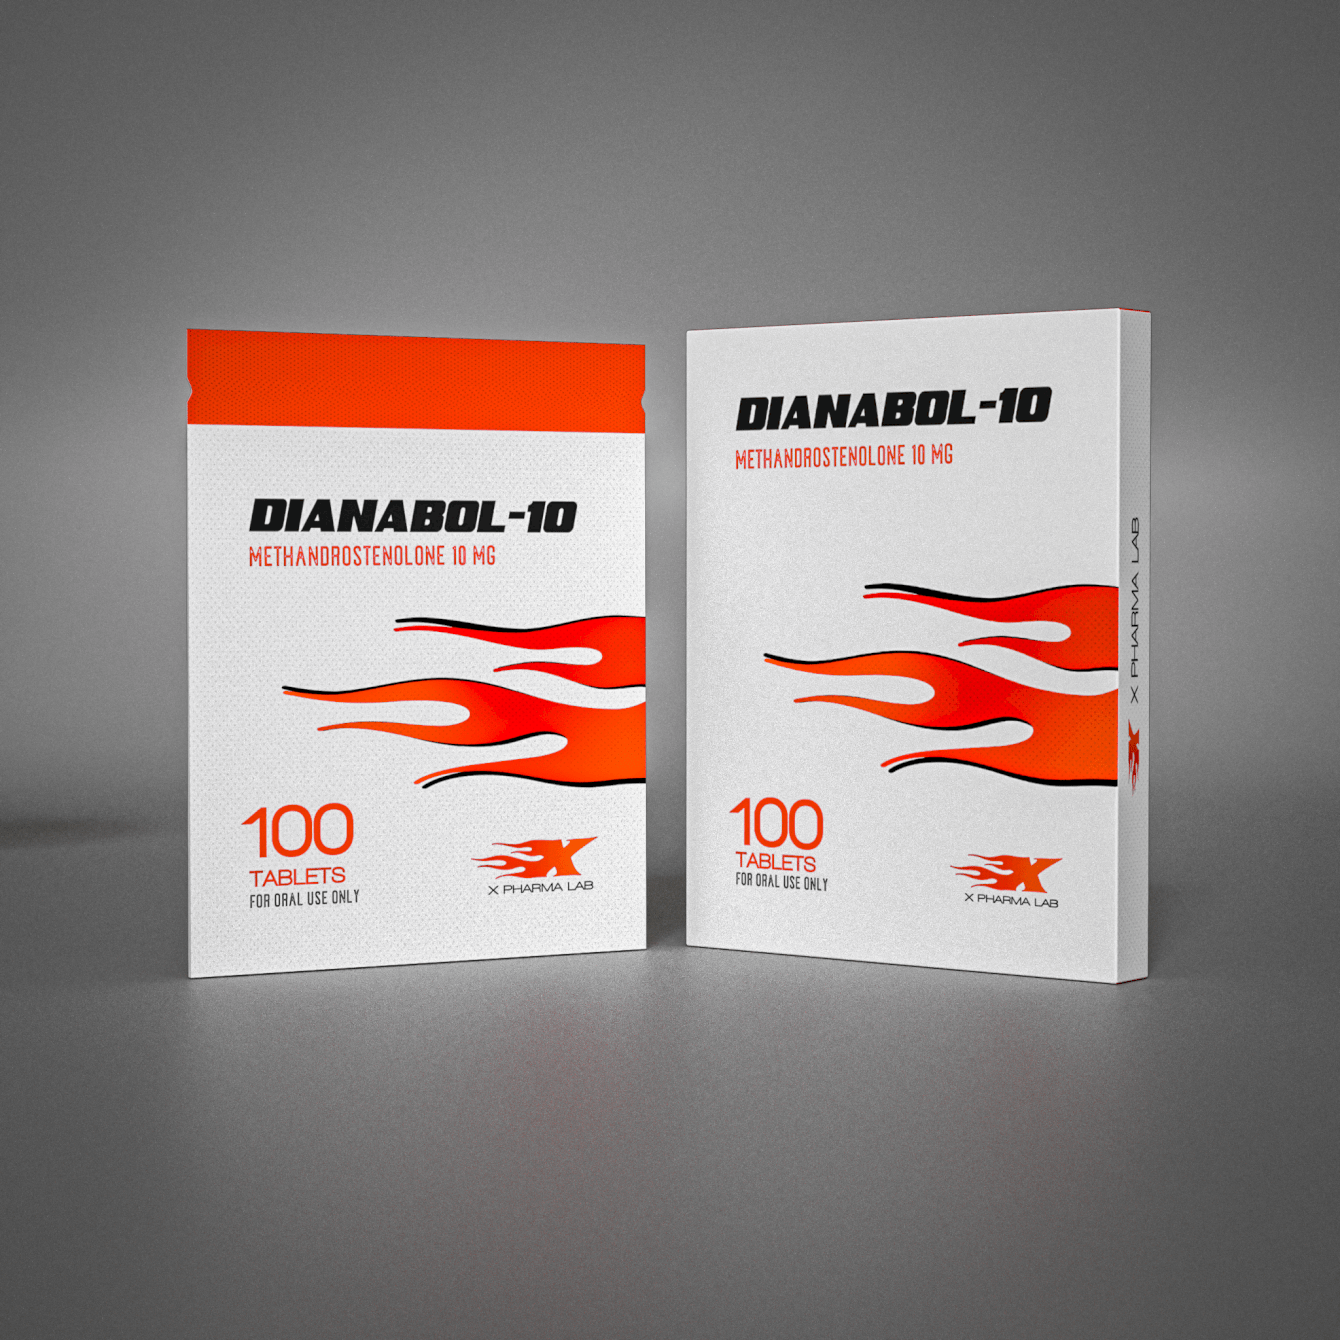 DIANABOL-10